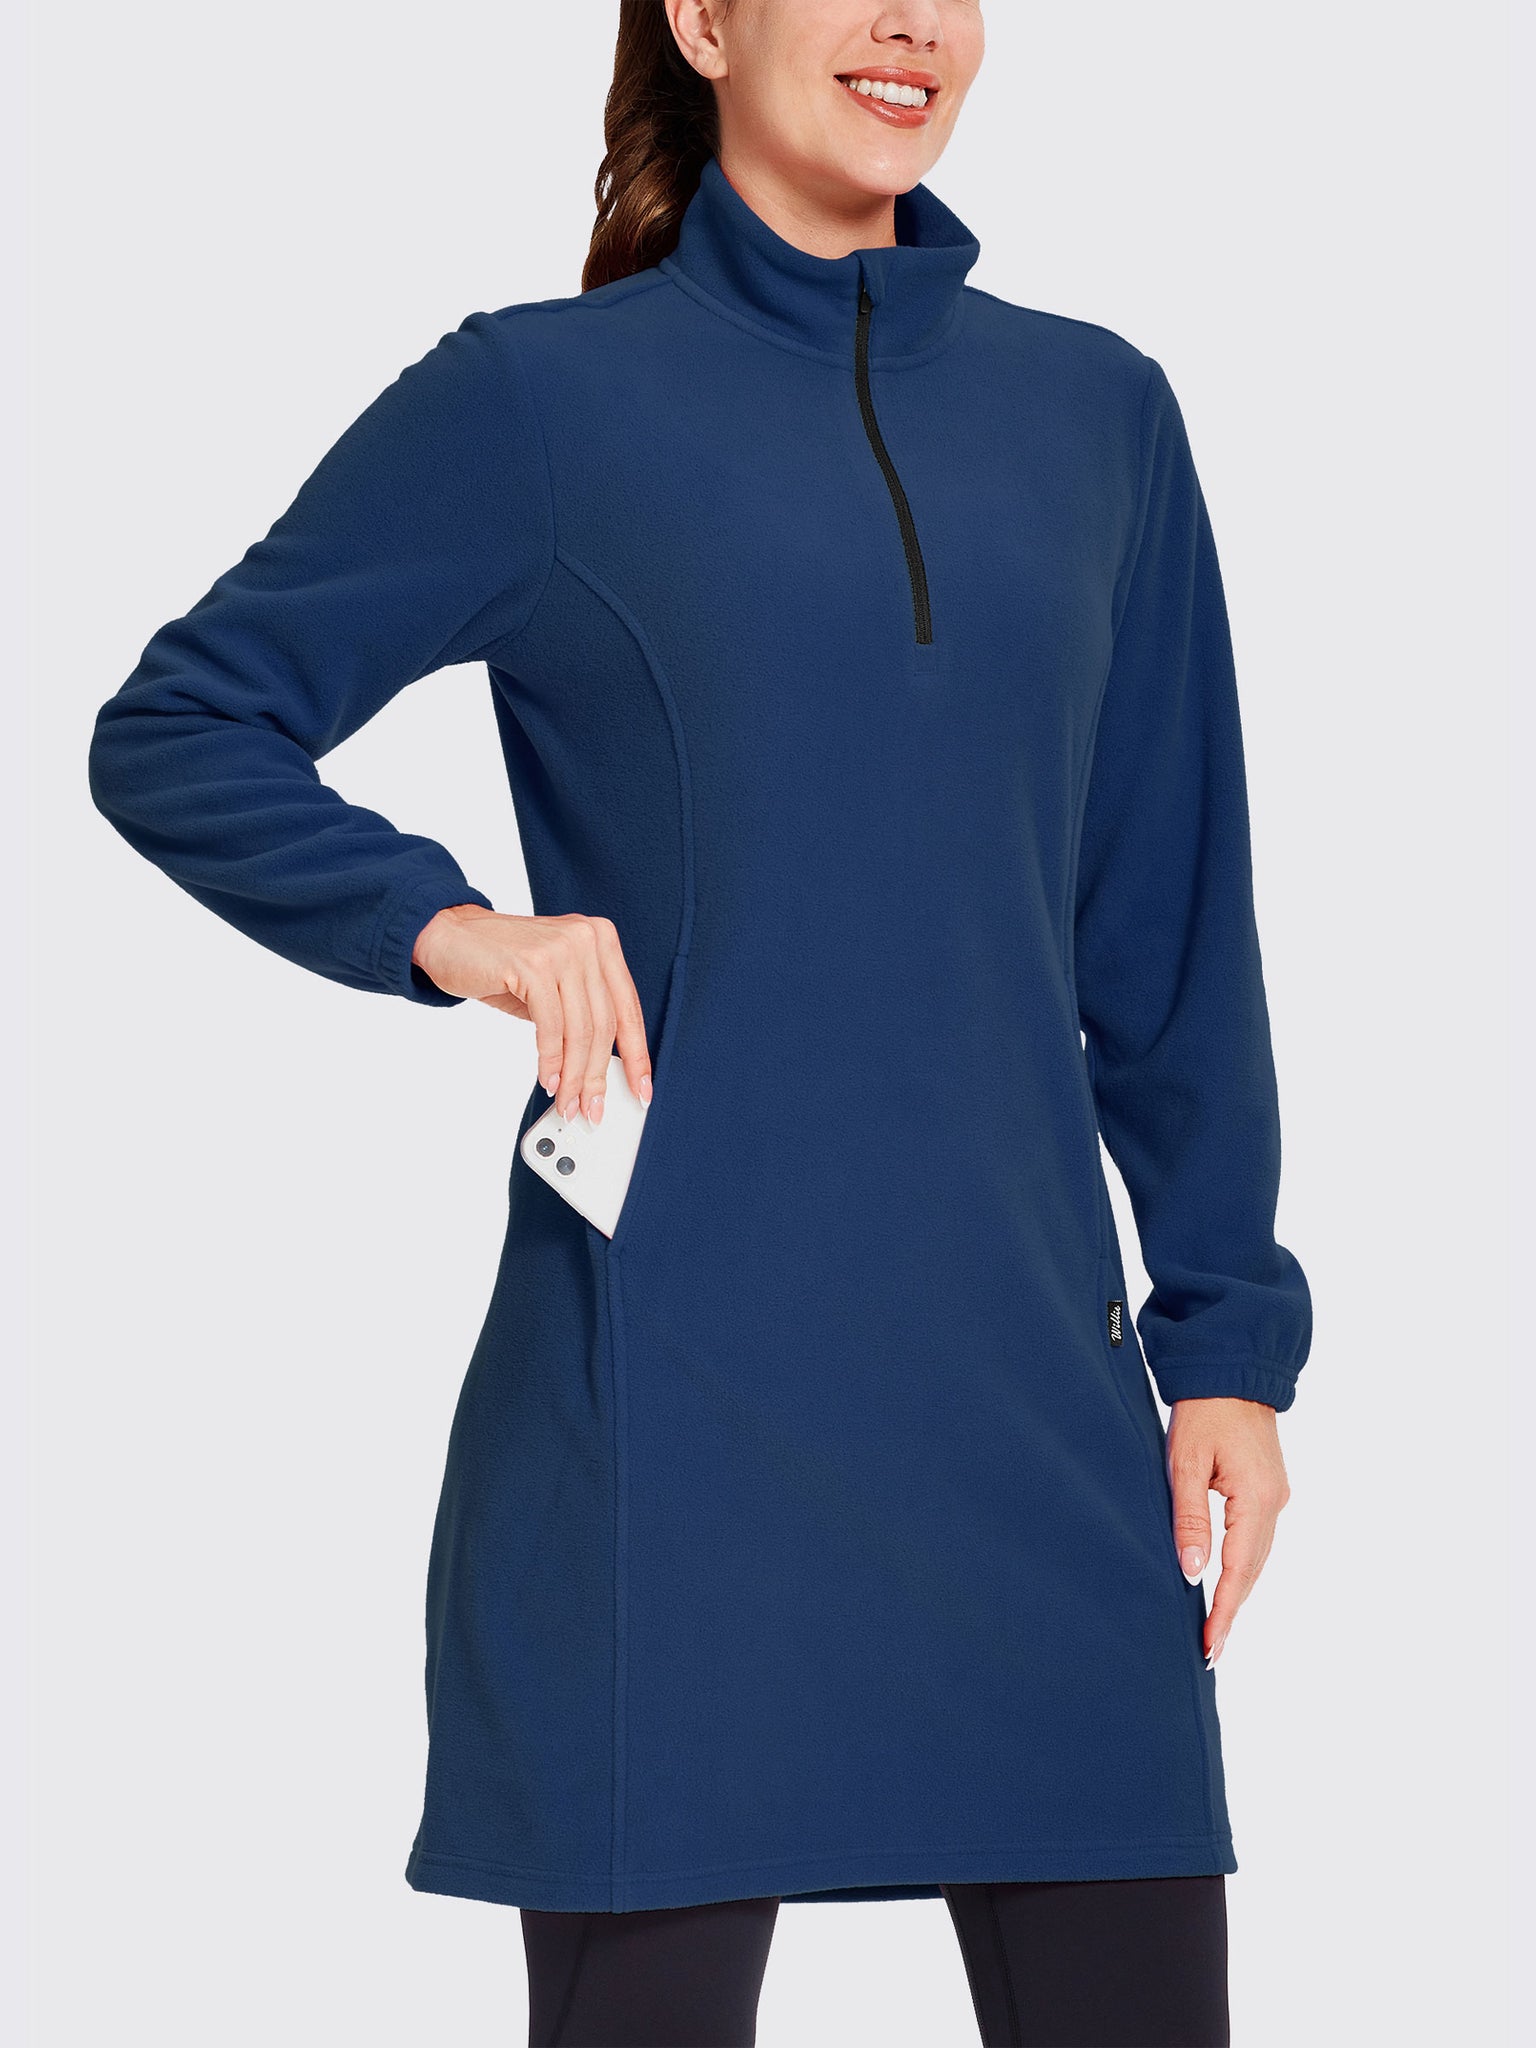 Women's Fleece Long-Sleeve Turtleneck Dress Navy2